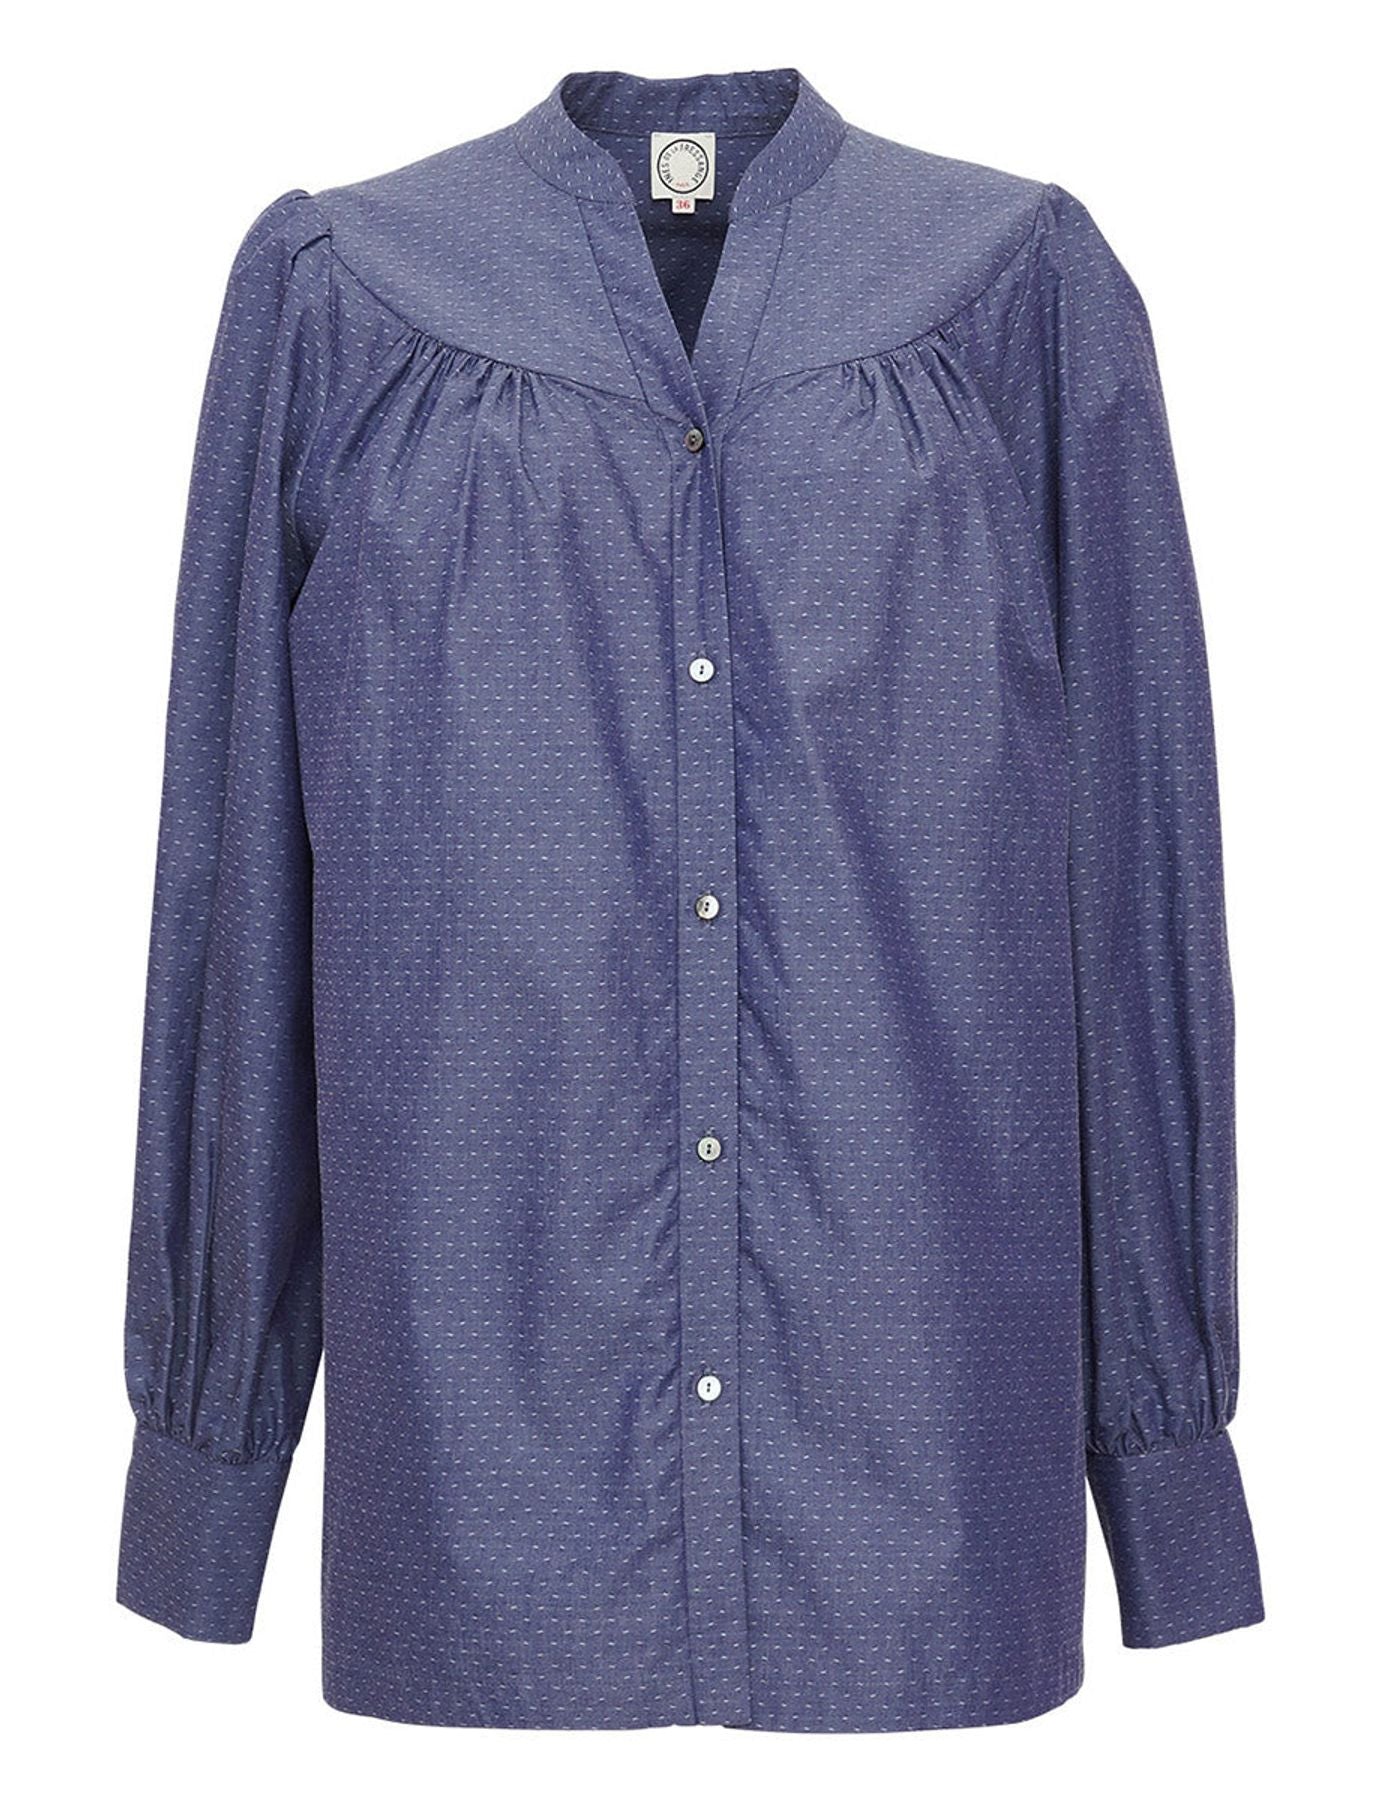 blouse-ornella-bleu-denim